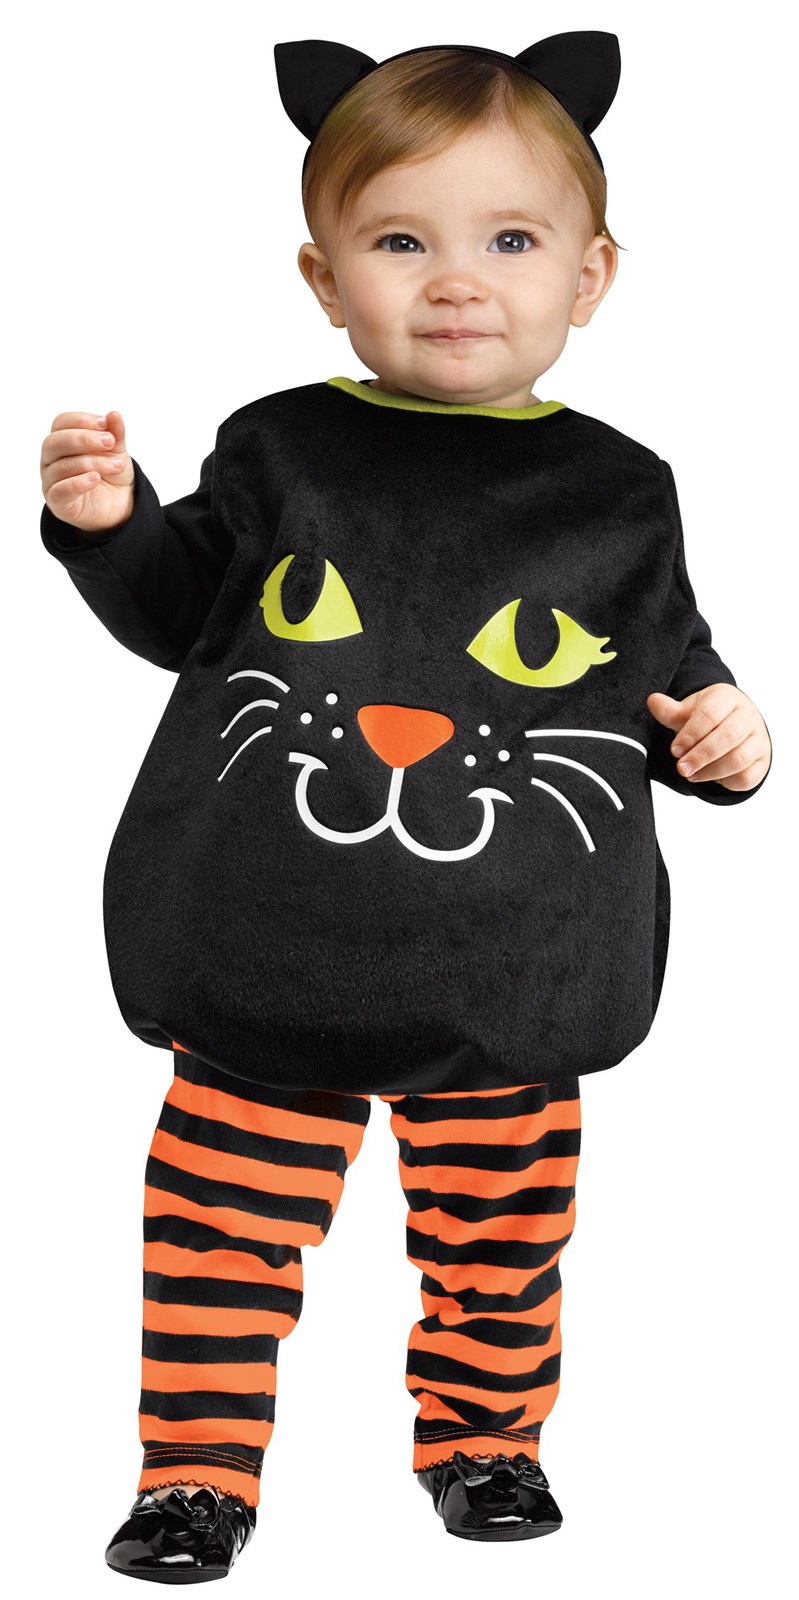 Toddler Itty Bitty Kitty Costume